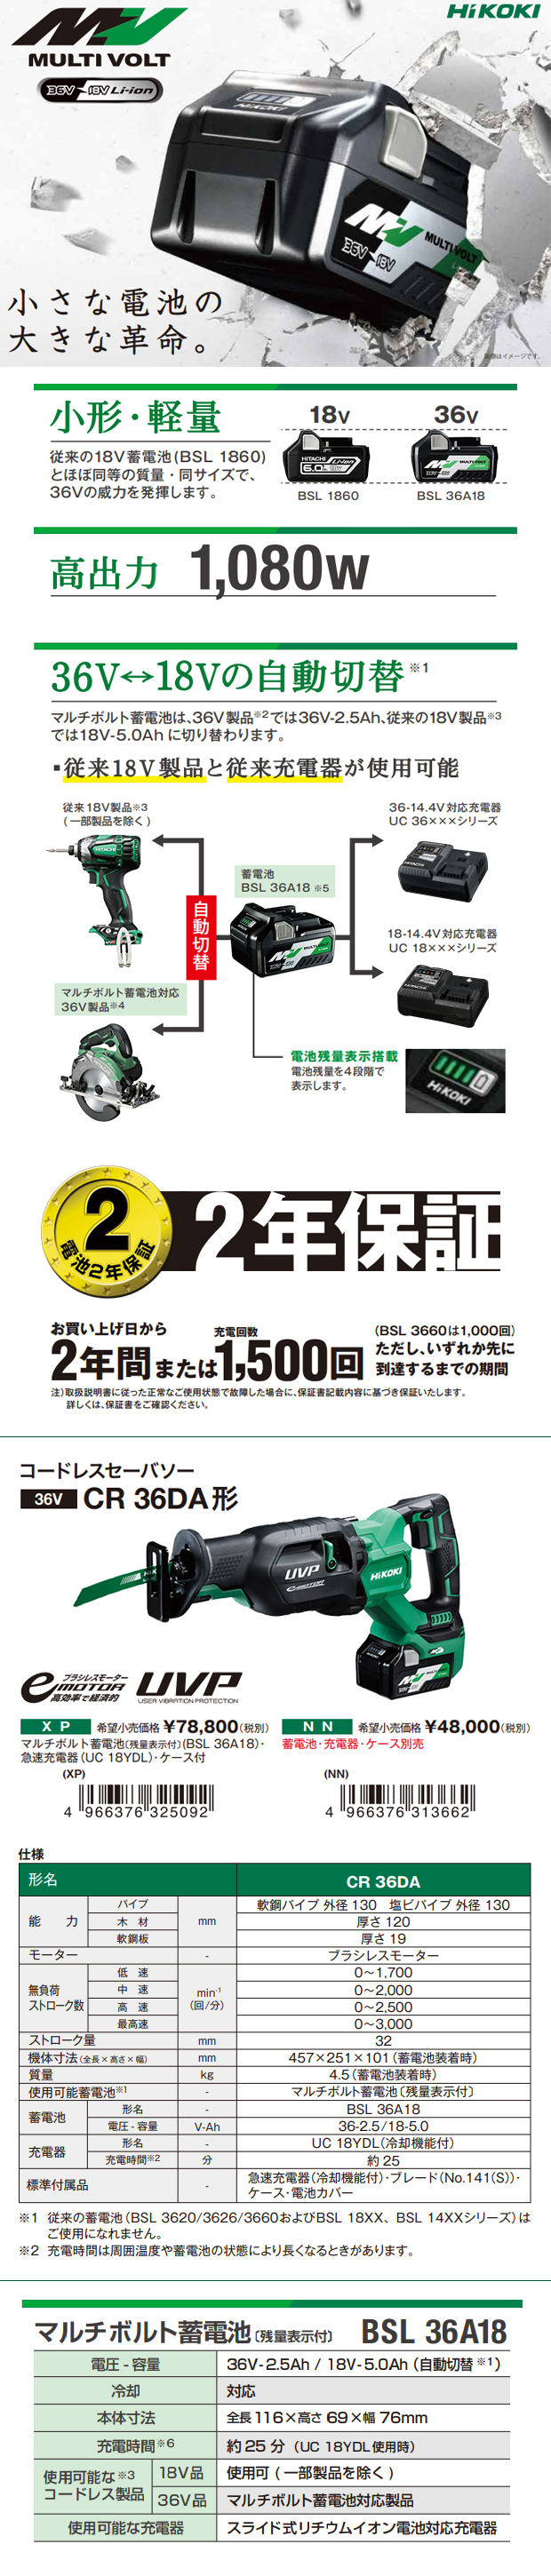 HiKOKI マルチボルト コードレスセーバソー CR36DA 電動工具・エアー